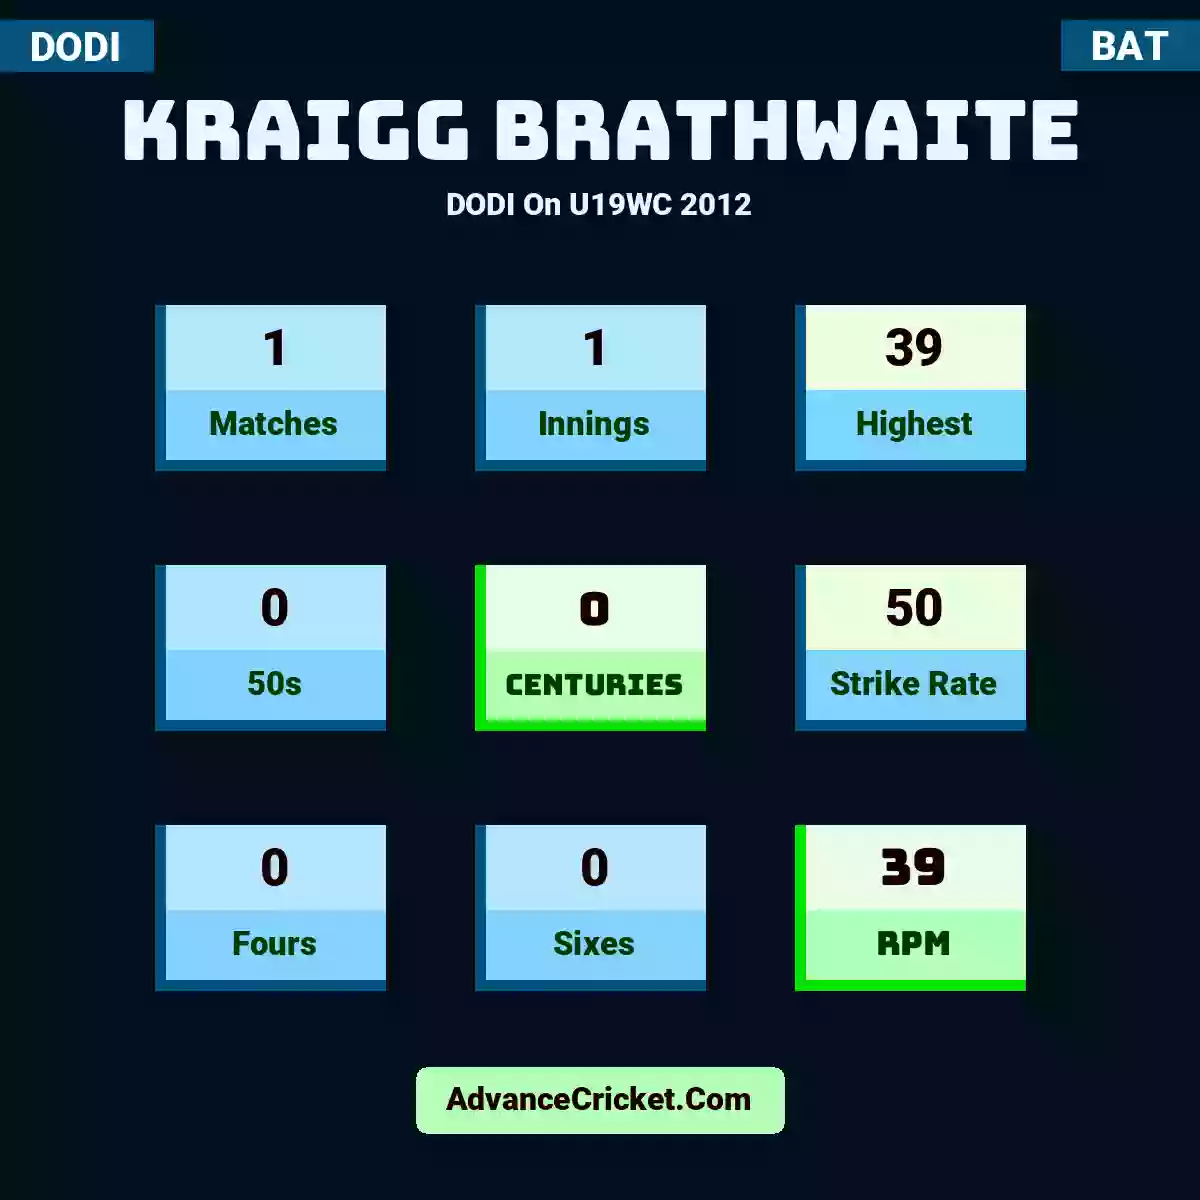 Kraigg Brathwaite DODI  On U19WC 2012, Kraigg Brathwaite played 1 matches, scored 39 runs as highest, 0 half-centuries, and 0 centuries, with a strike rate of 50. K.Brathwaite hit 0 fours and 0 sixes, with an RPM of 39.